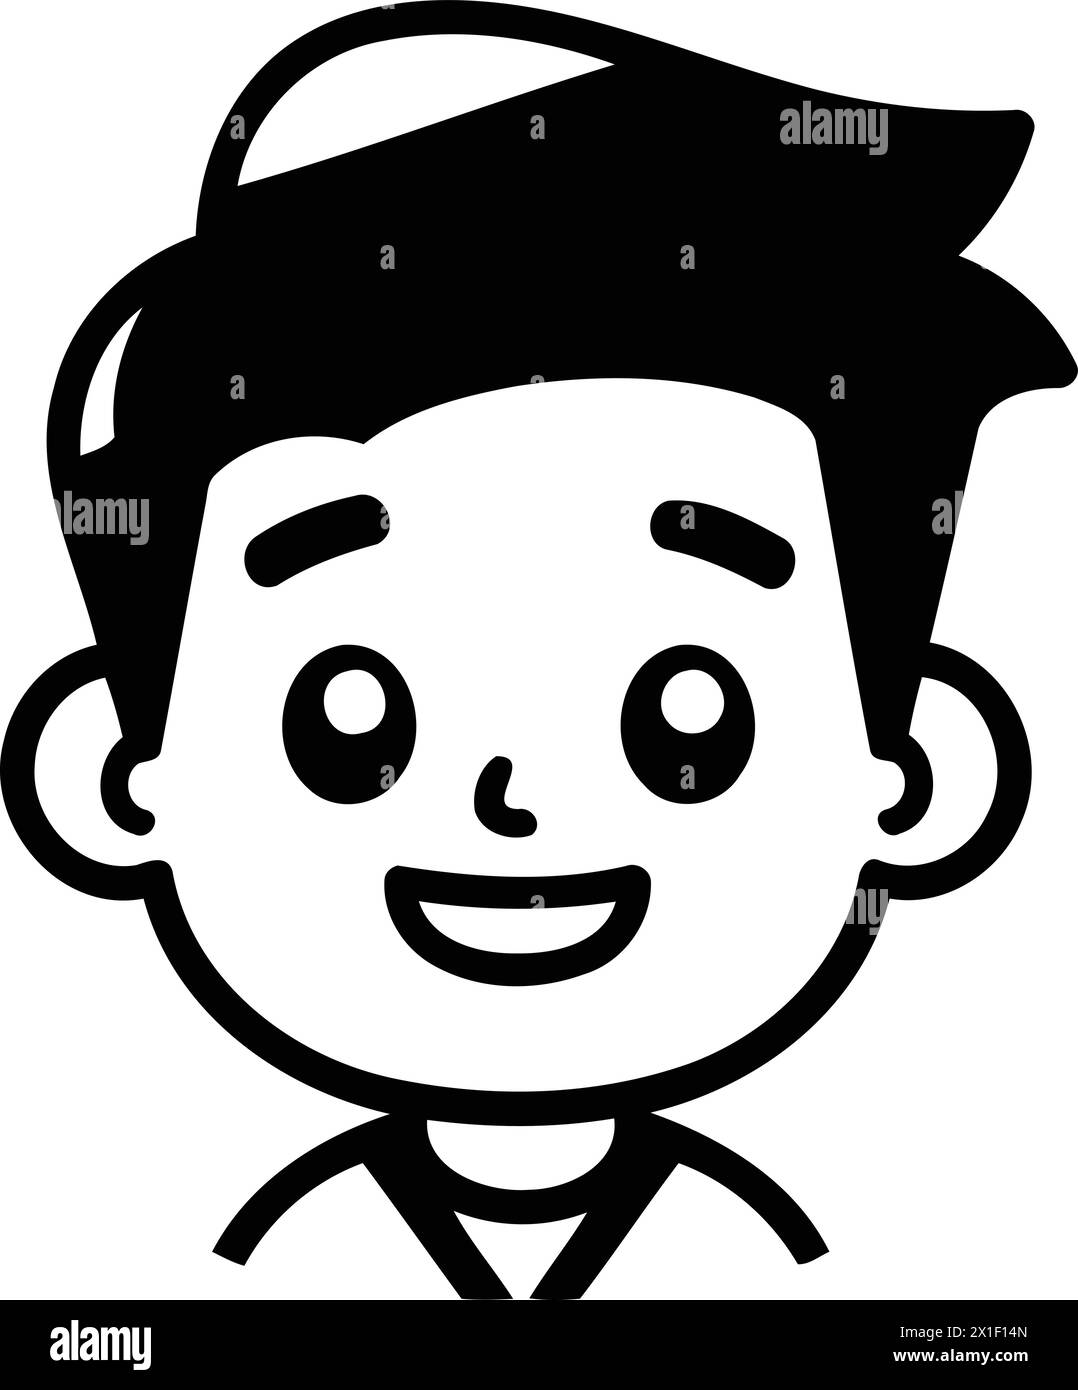 Boy Smiling Face Cartoon Mascot Character Vector Design Illustration Stock Vector